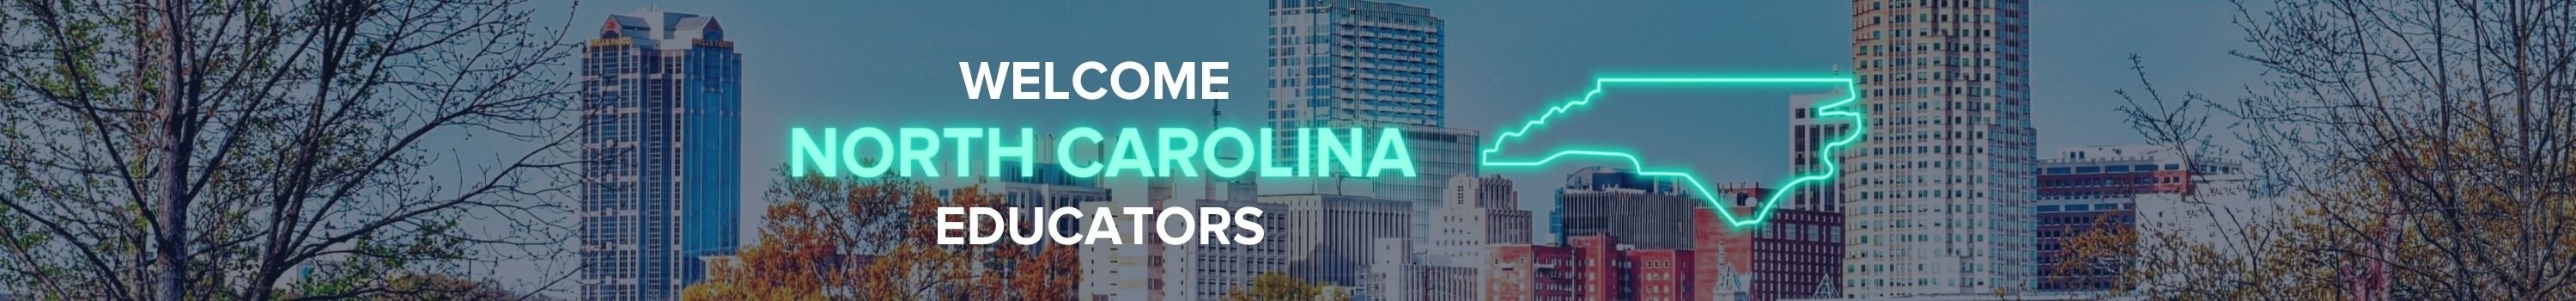 Welcome North Carolina Educators